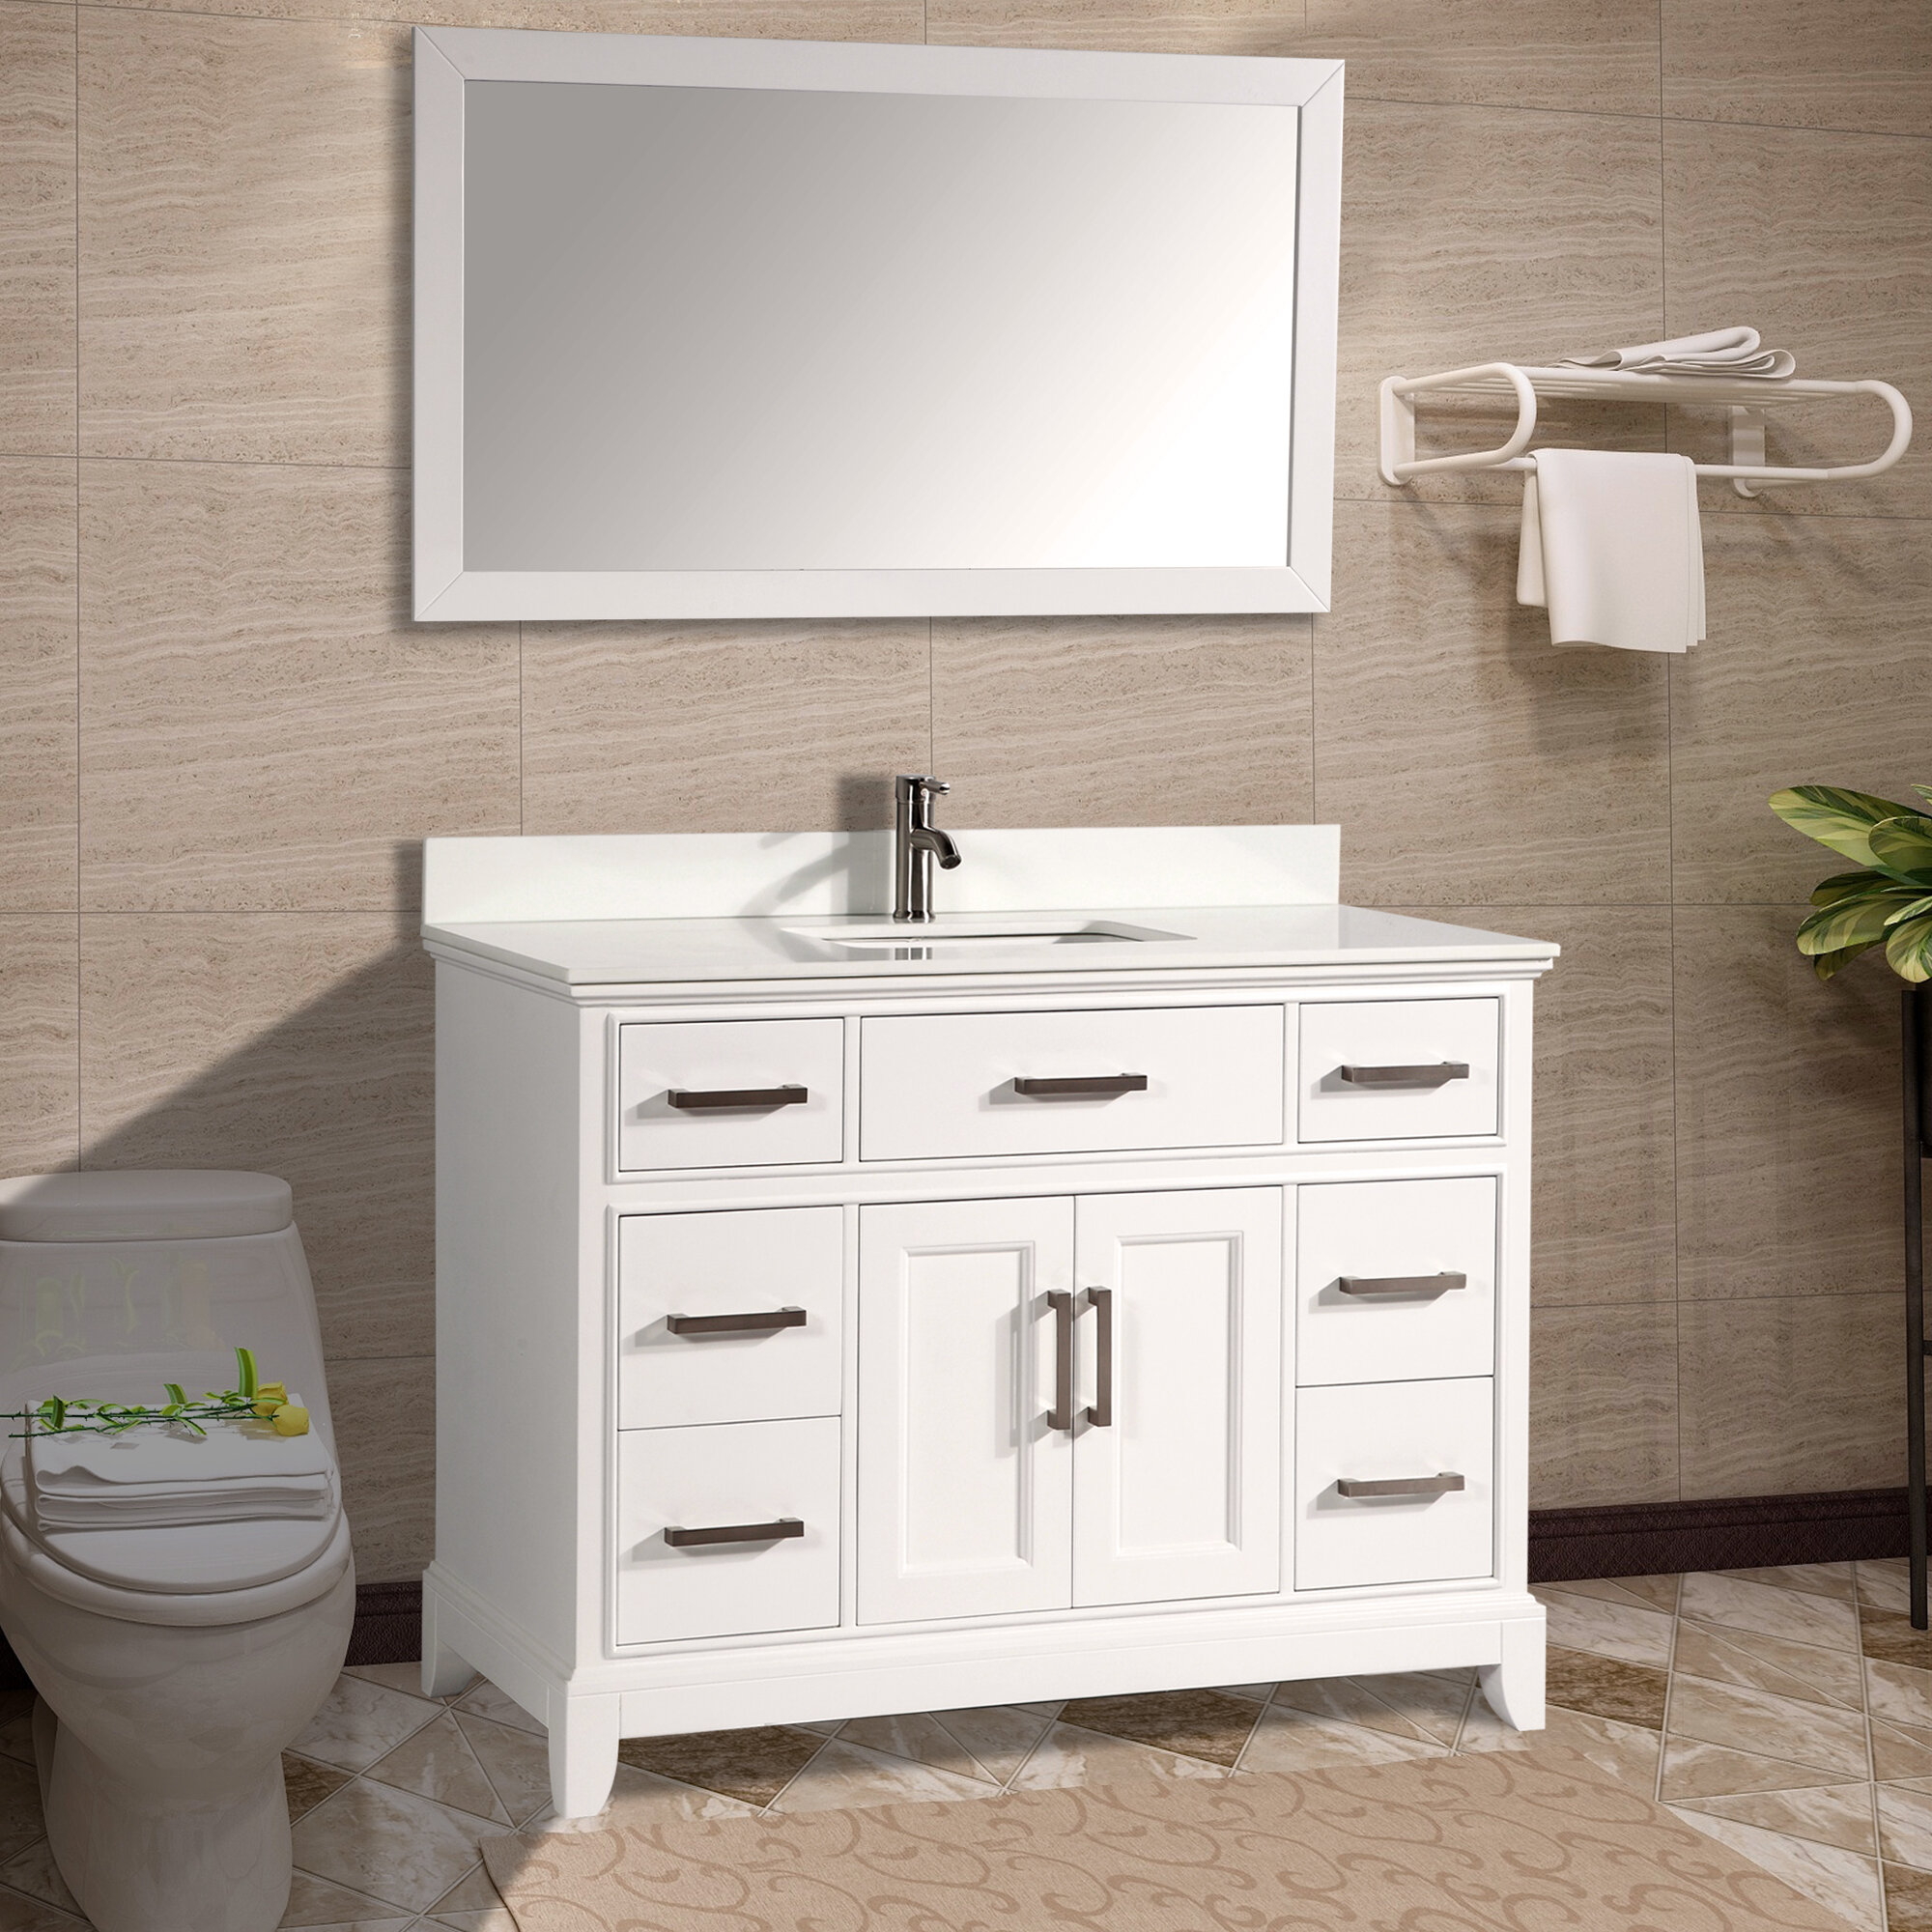 Andover Mills Valor 60 Single Bathroom Vanity With Mirror Reviews Wayfair